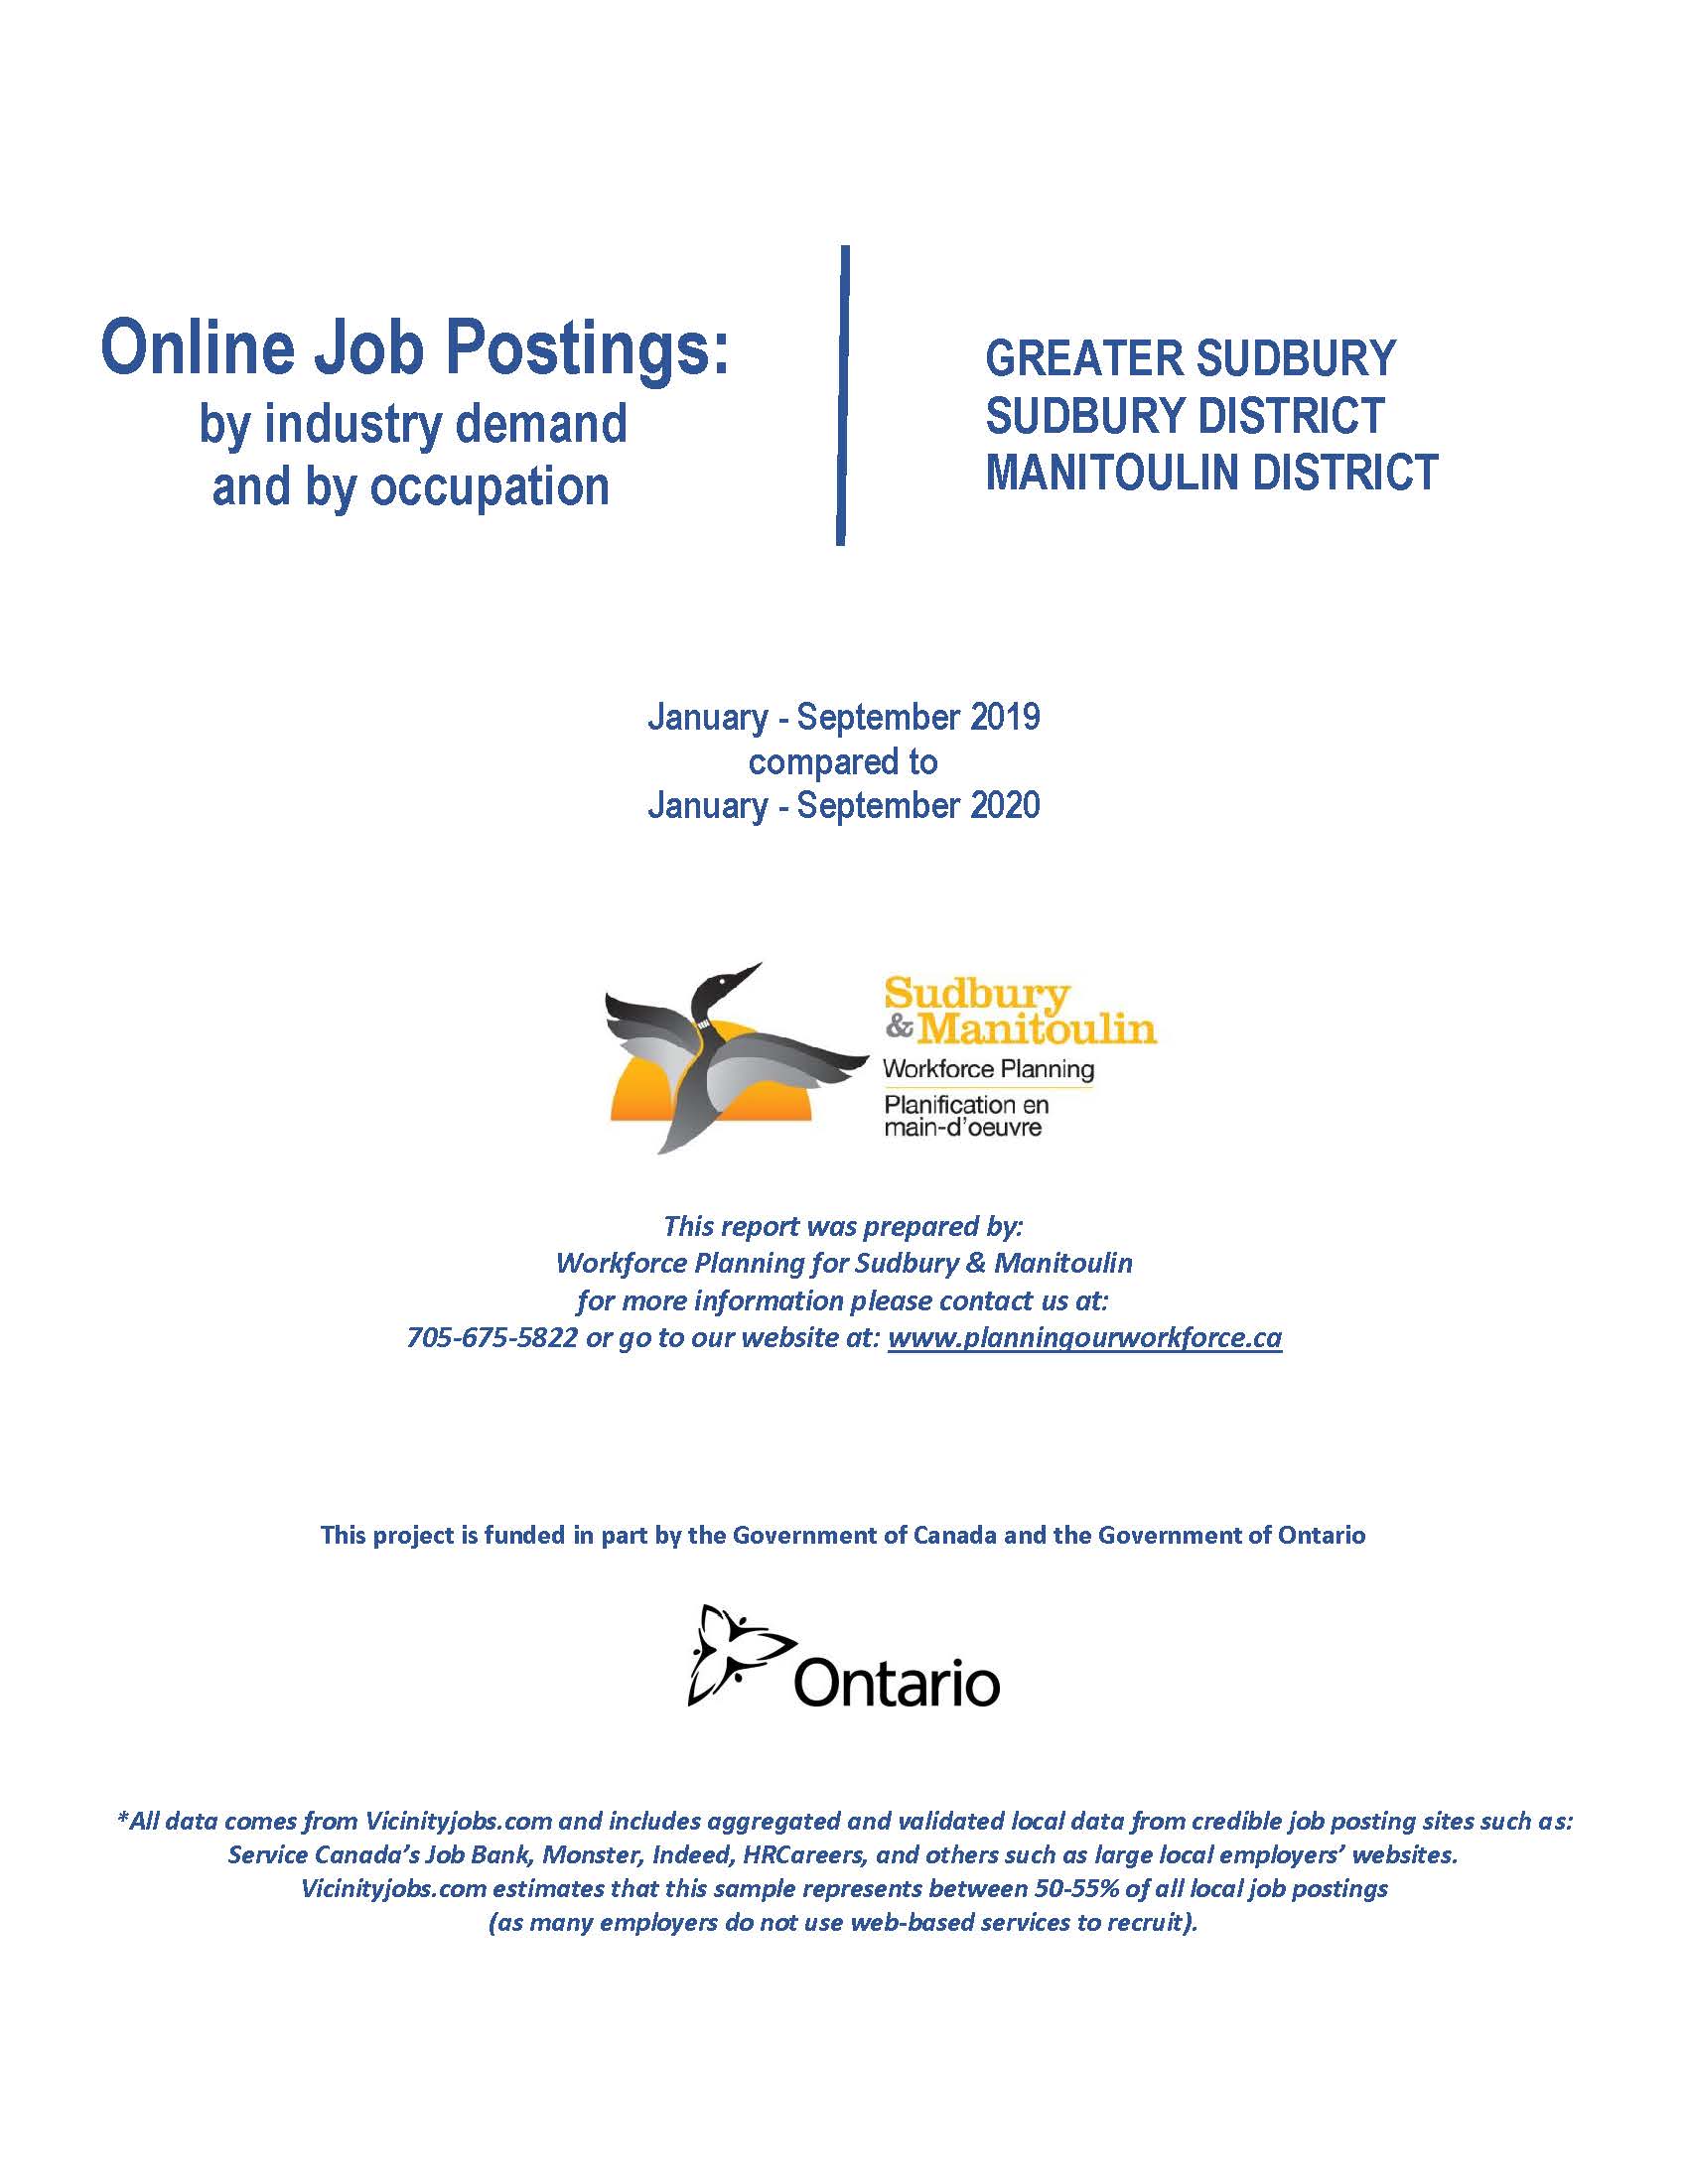 Annual Online Job Vacancies Report 